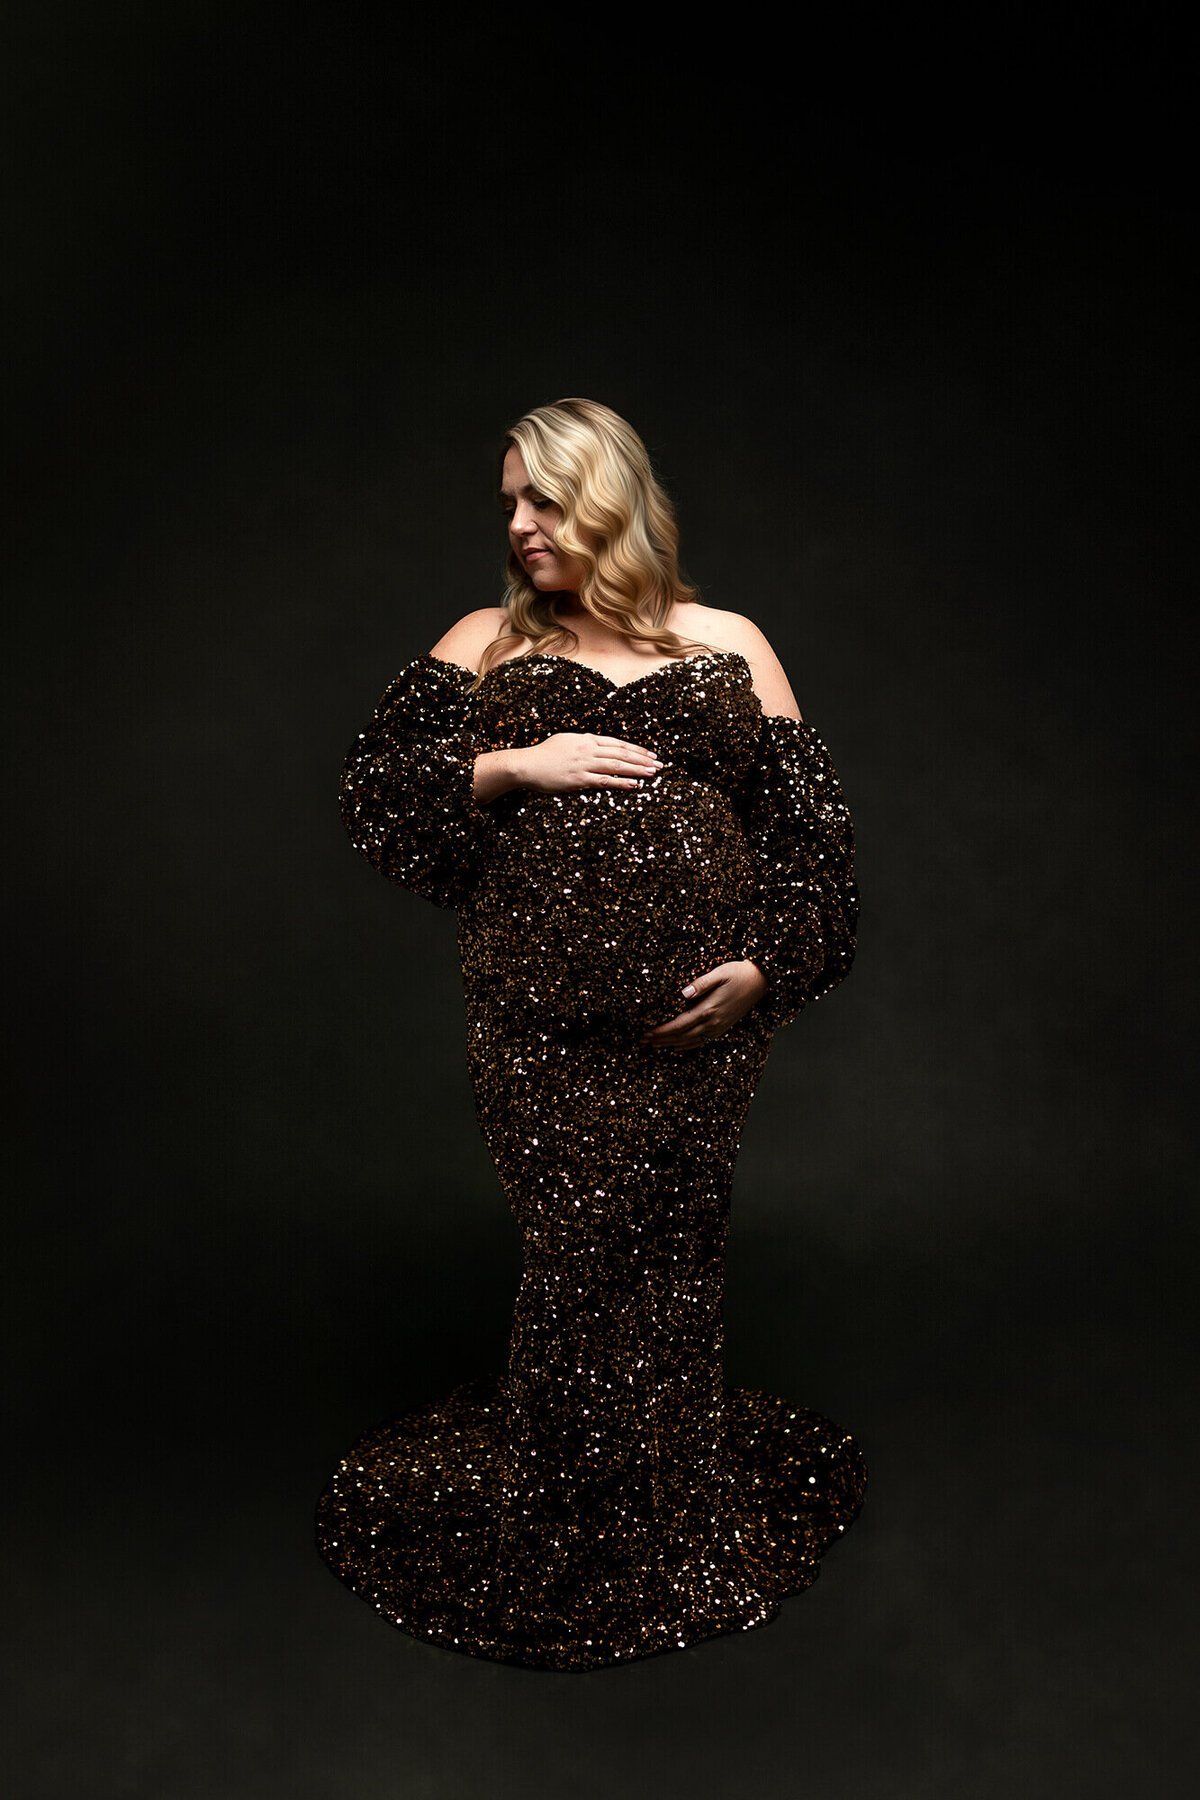 minnesota-maternity-photographer-3